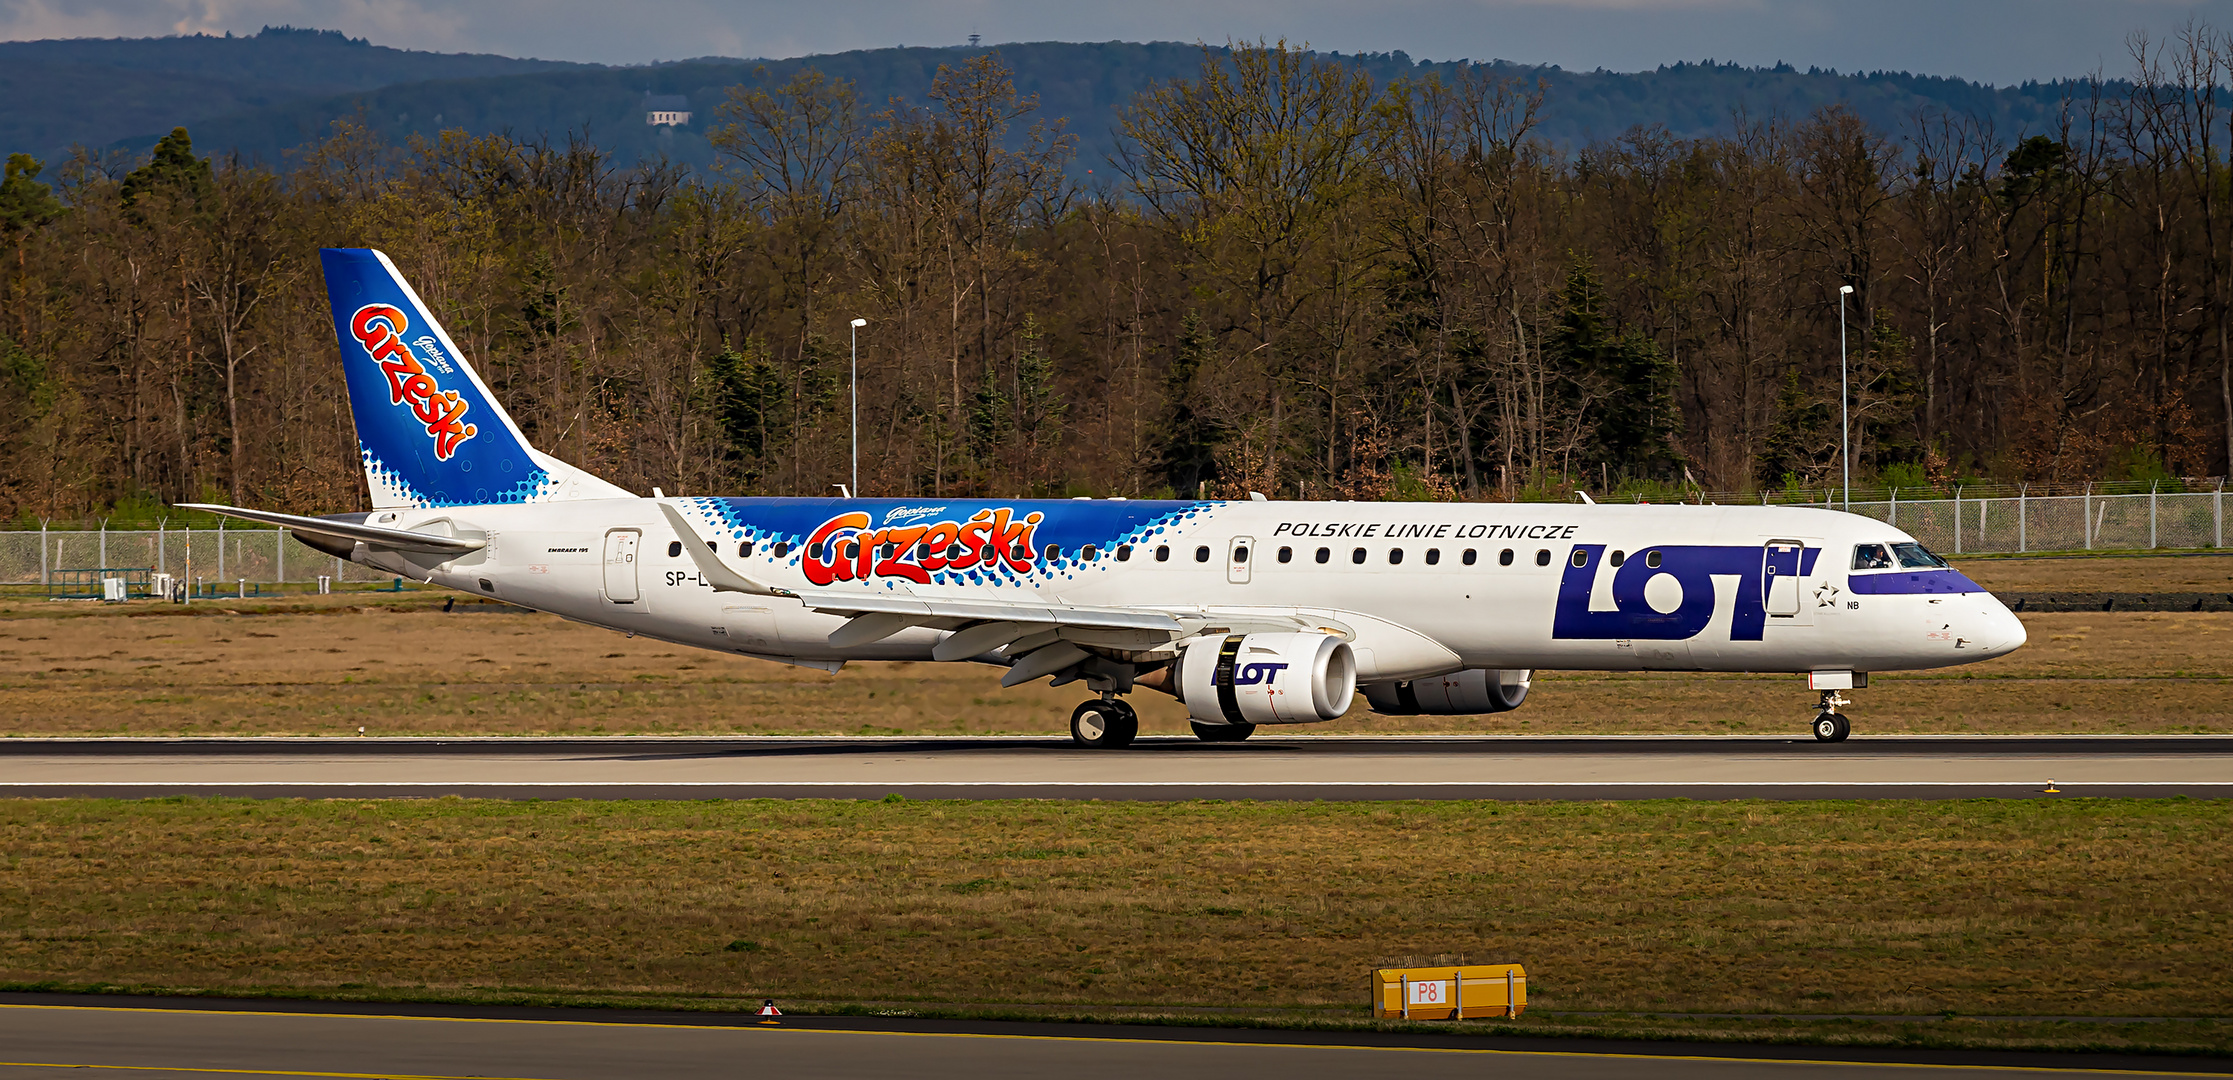 LOT Polish Airlines (Grzeski Livery), Embraer E195LR